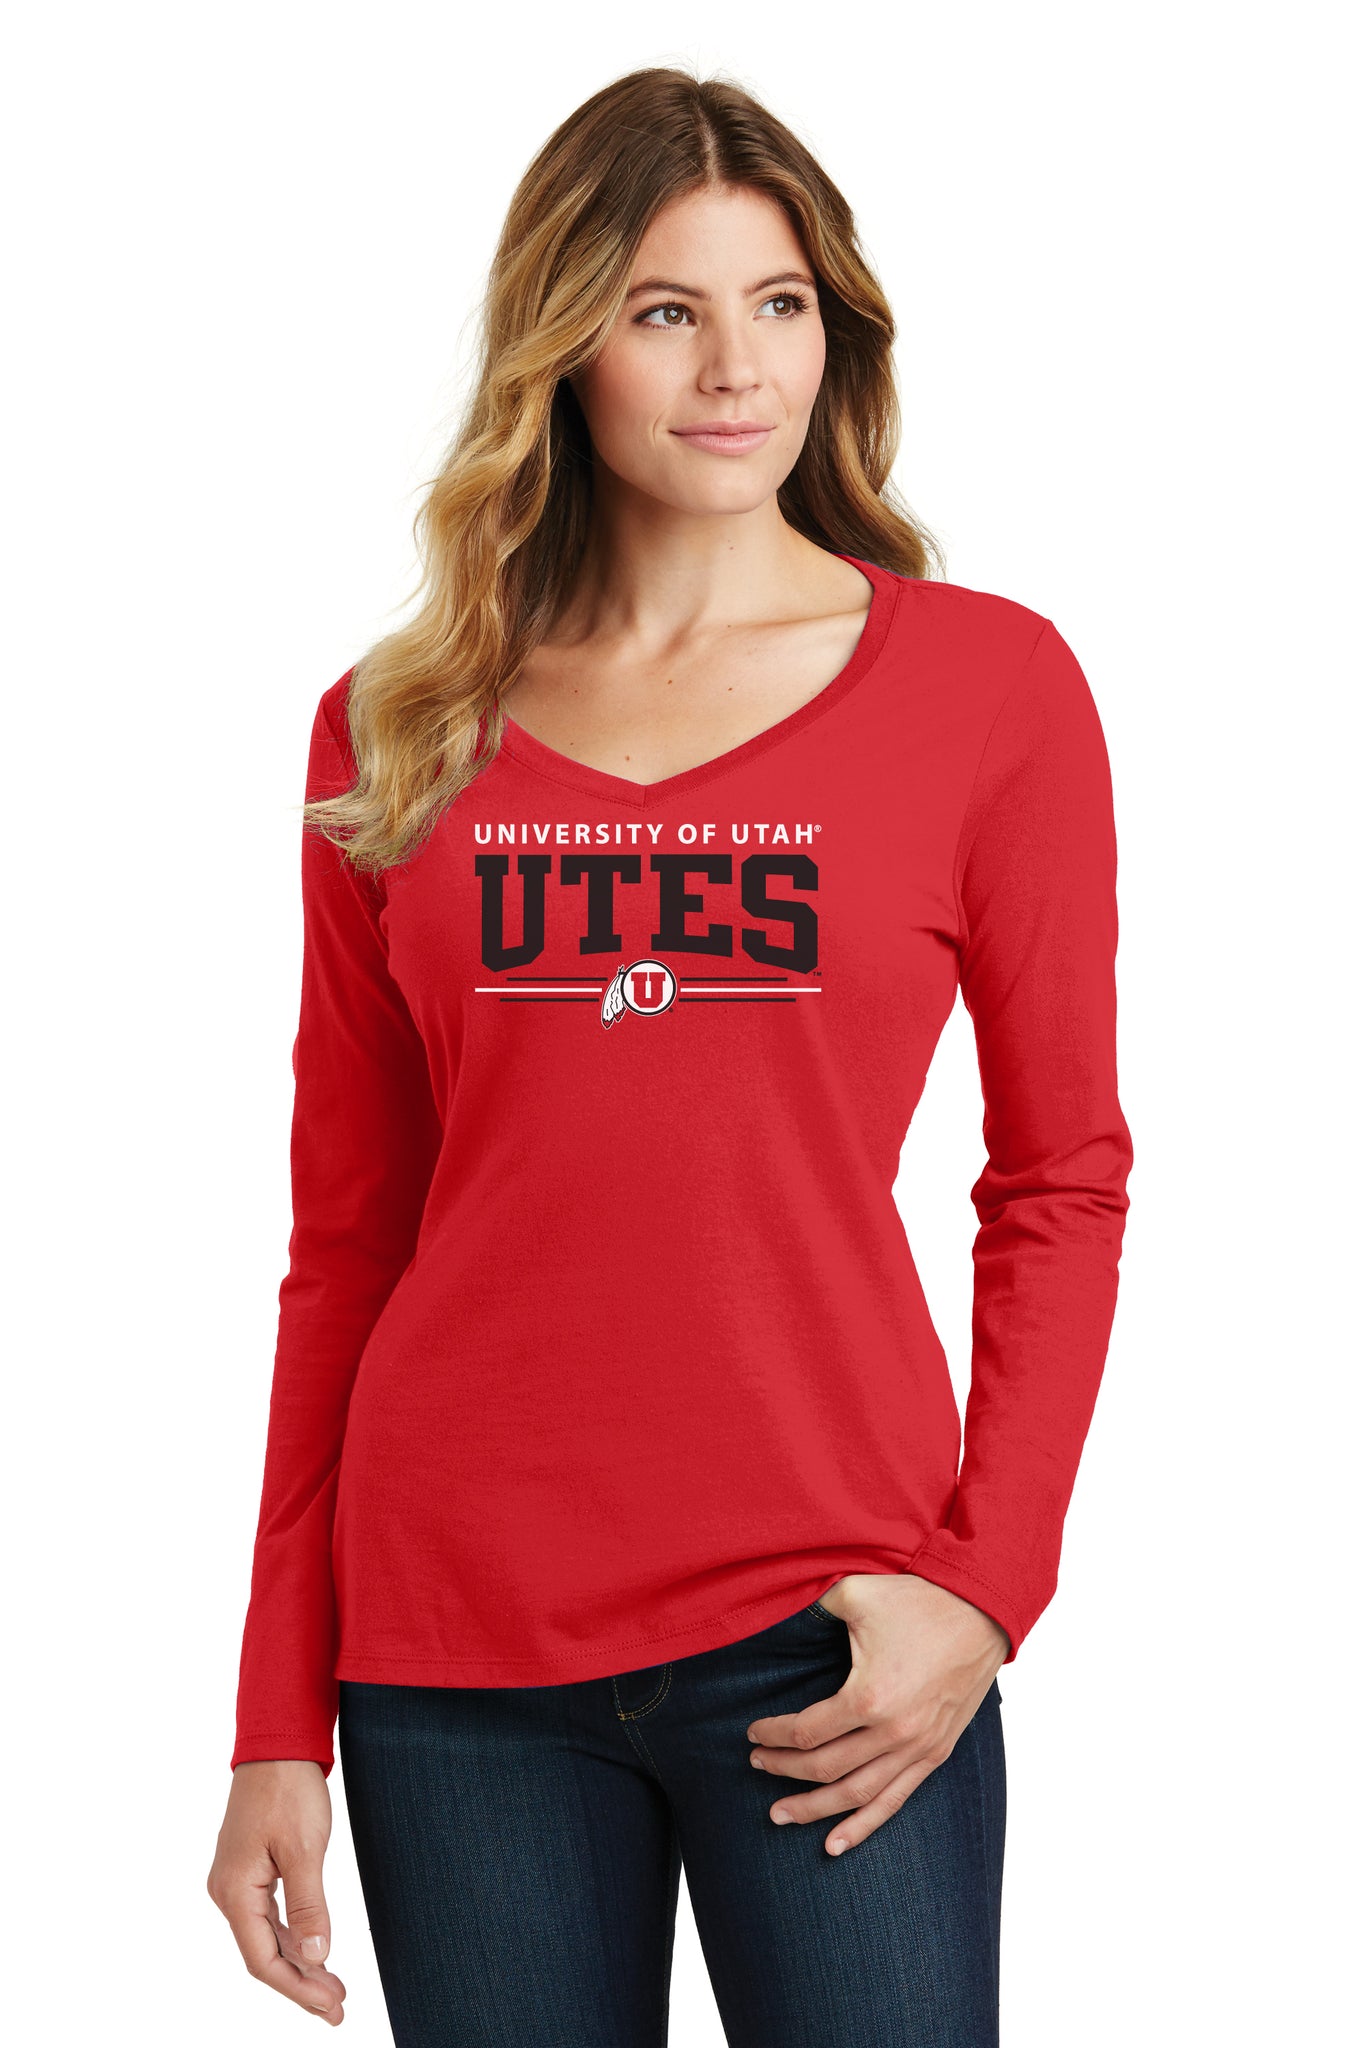 Women's Utah Utes Long Sleeve V-Neck Tee Shirt - Arch Utes 3